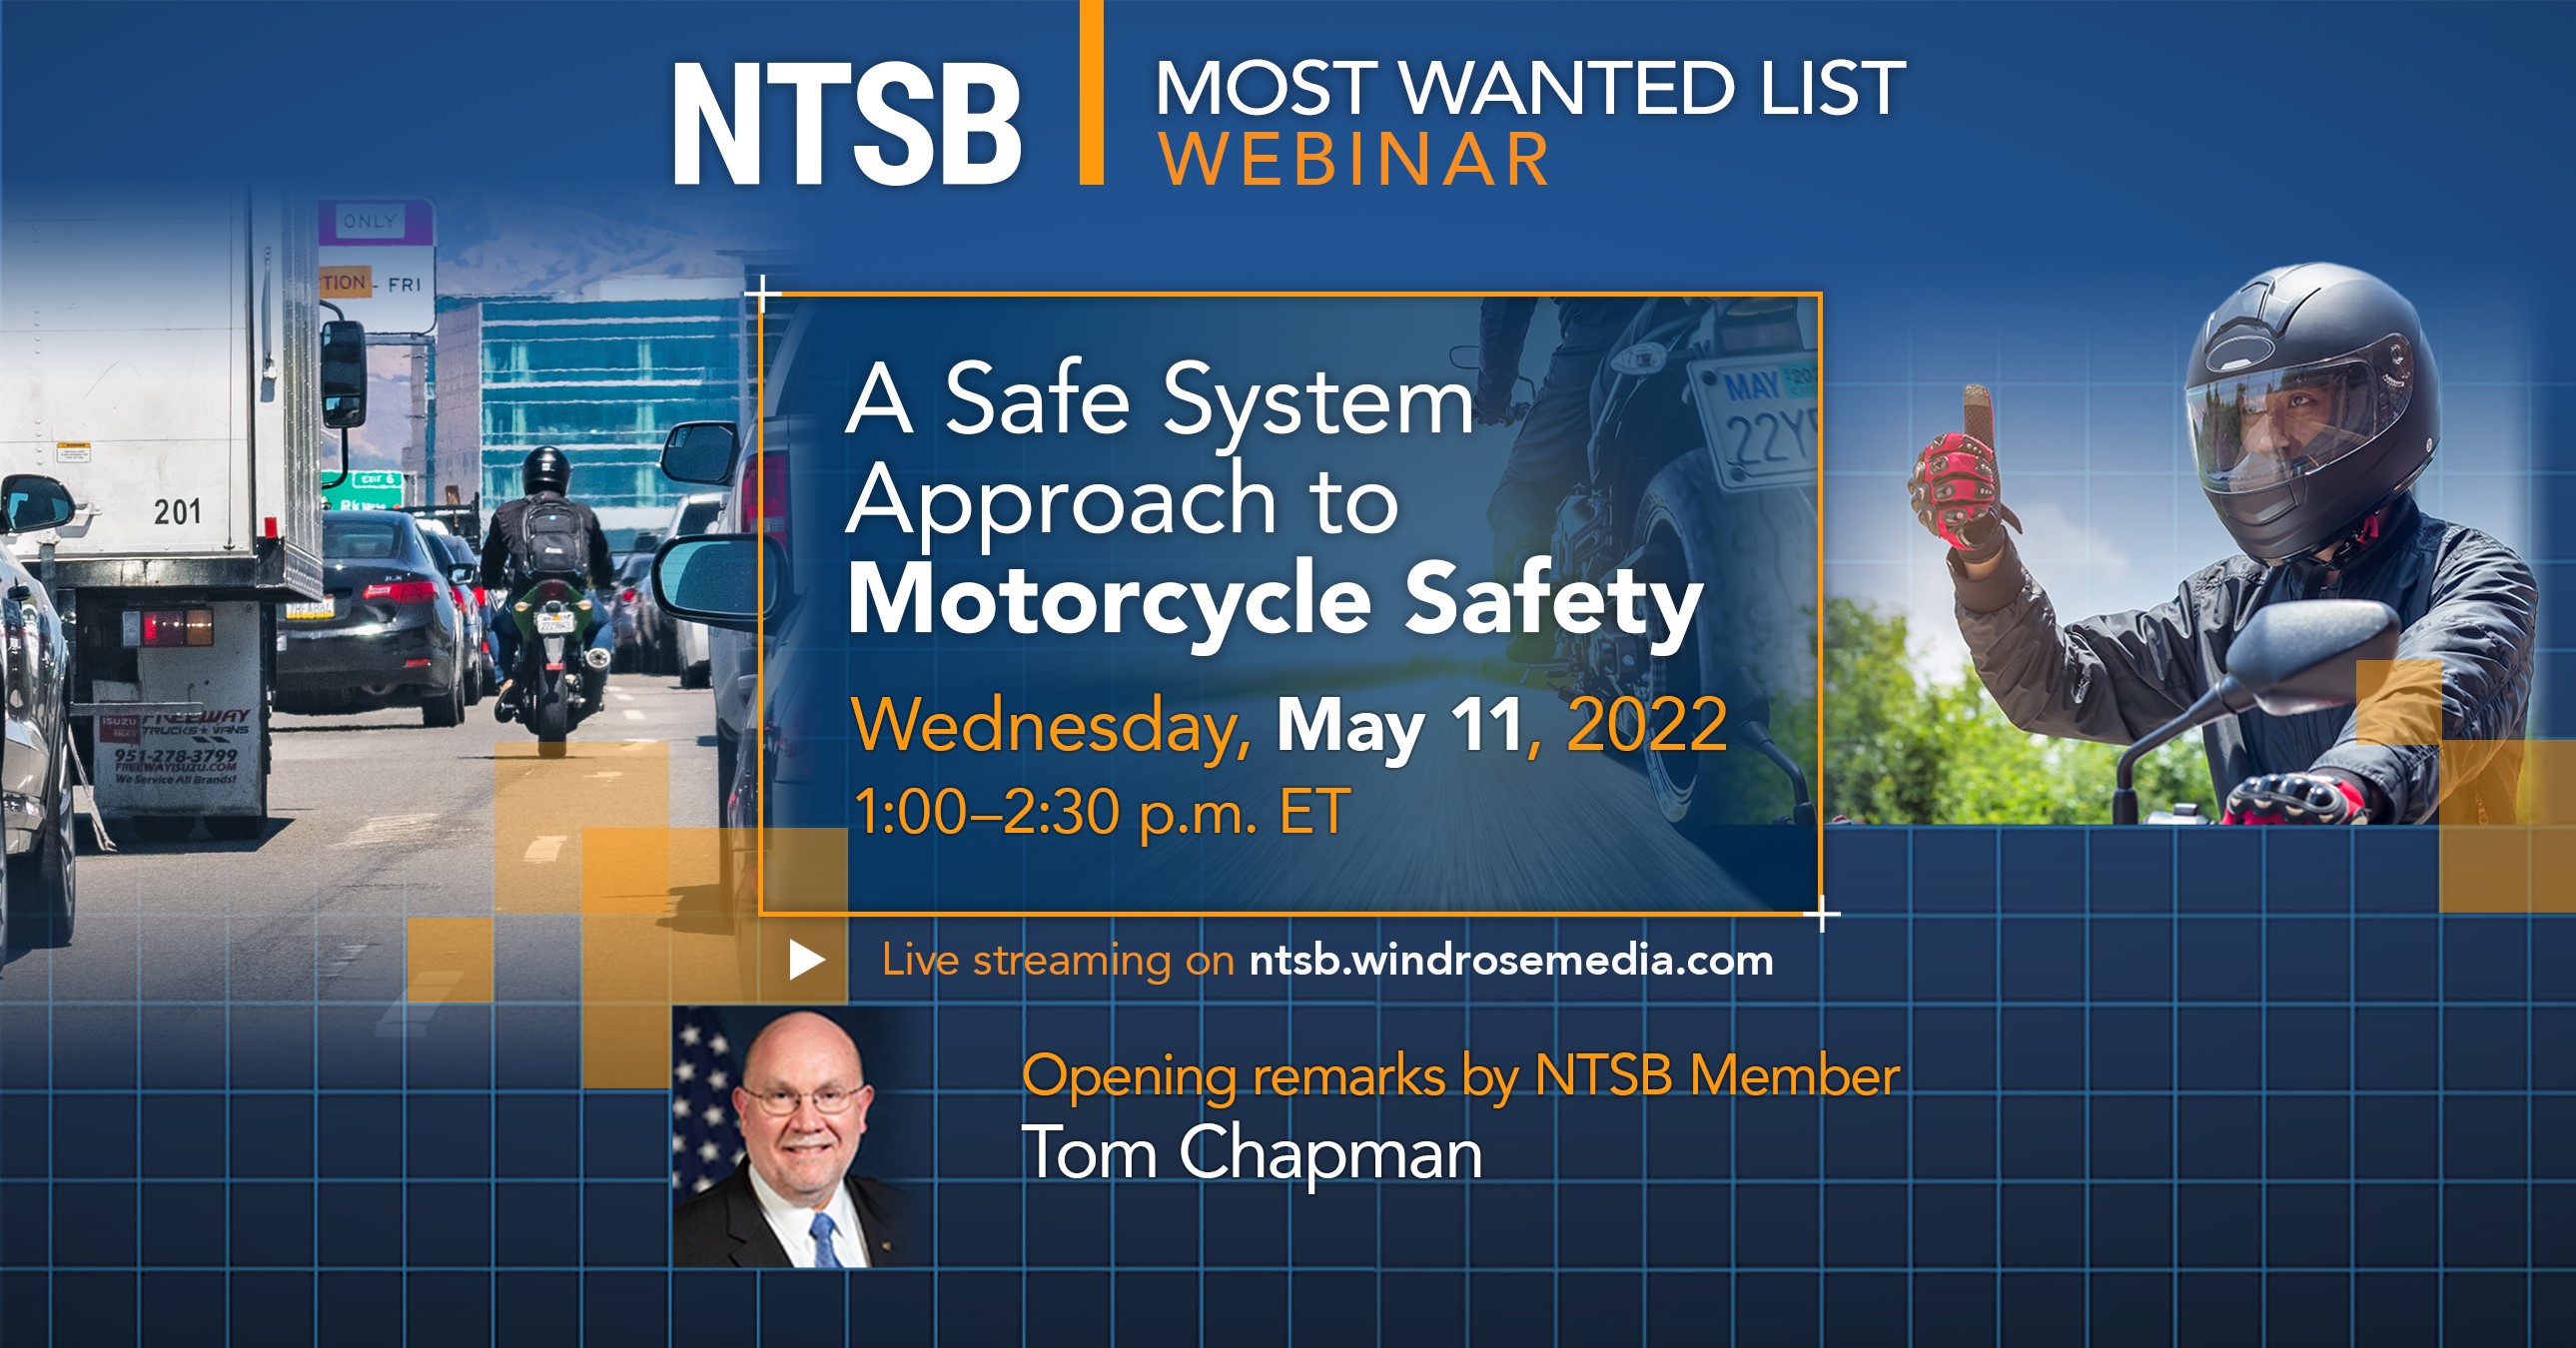 MWL Webinar A Safe System Approach to Motorcycle Safety